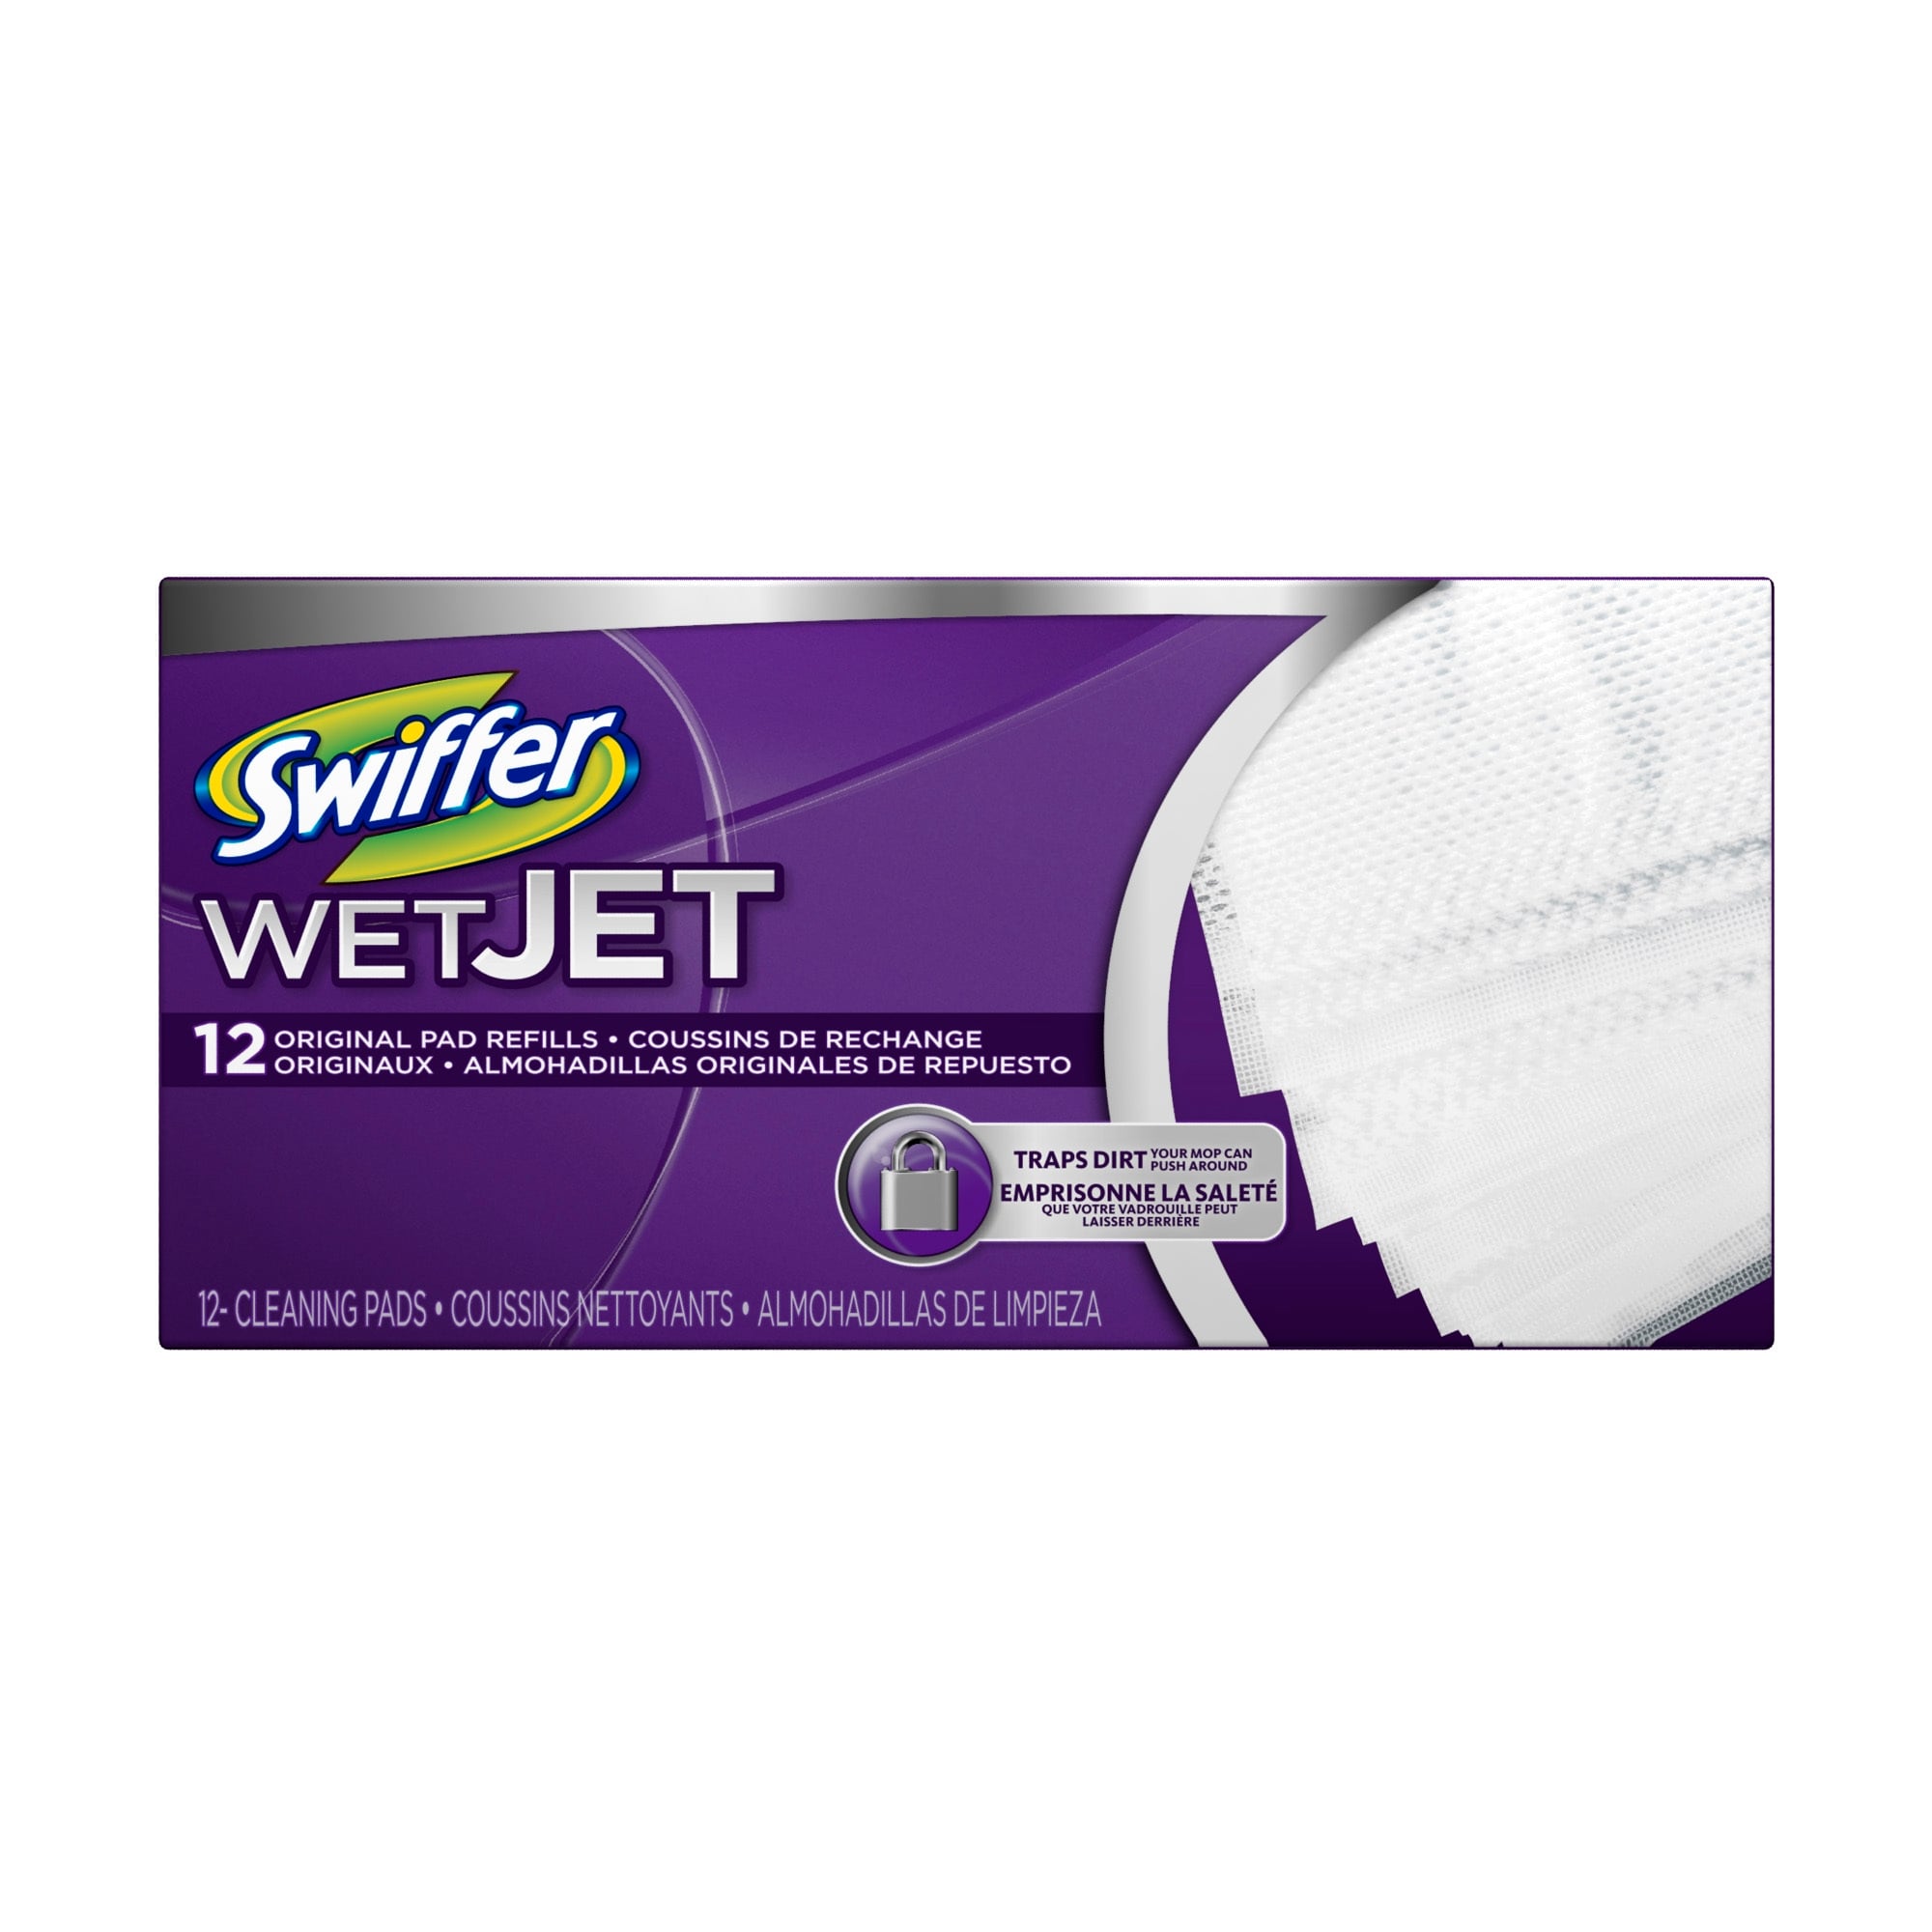 swiffer wet jet pad instructions